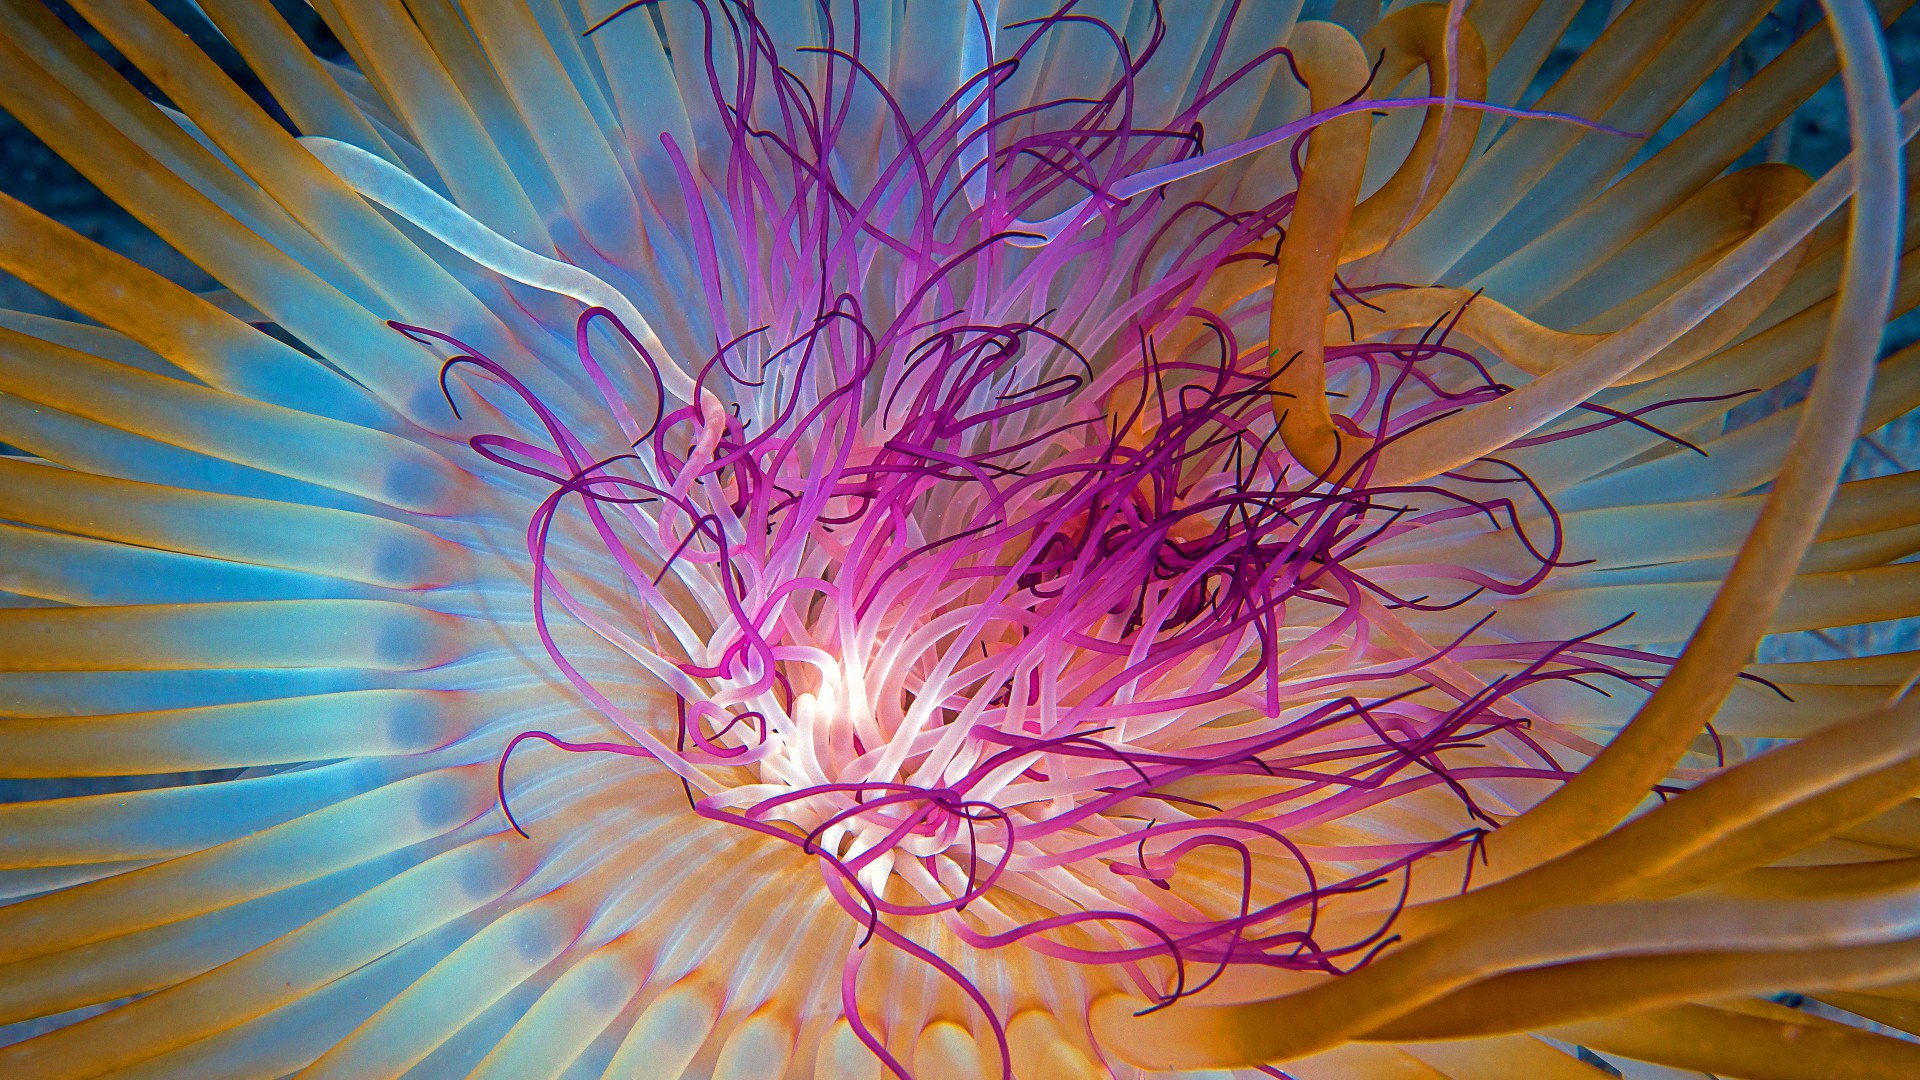 Jellyfish, 4k, 5k wallpaper, HD, Indian Ocean, Georgia, Atlanta, diving, tourism, blue, orange, Malaysia, World's best diving sites (horizontal)